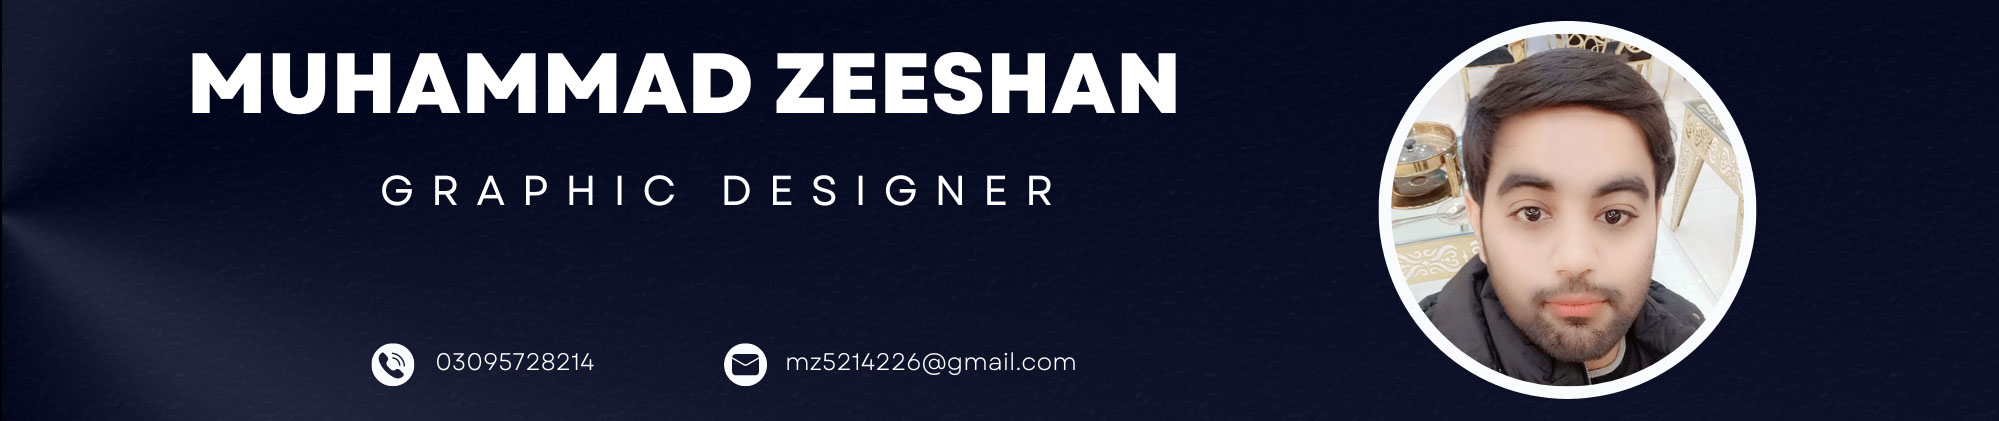 Muhammad Zeeshan's profile banner